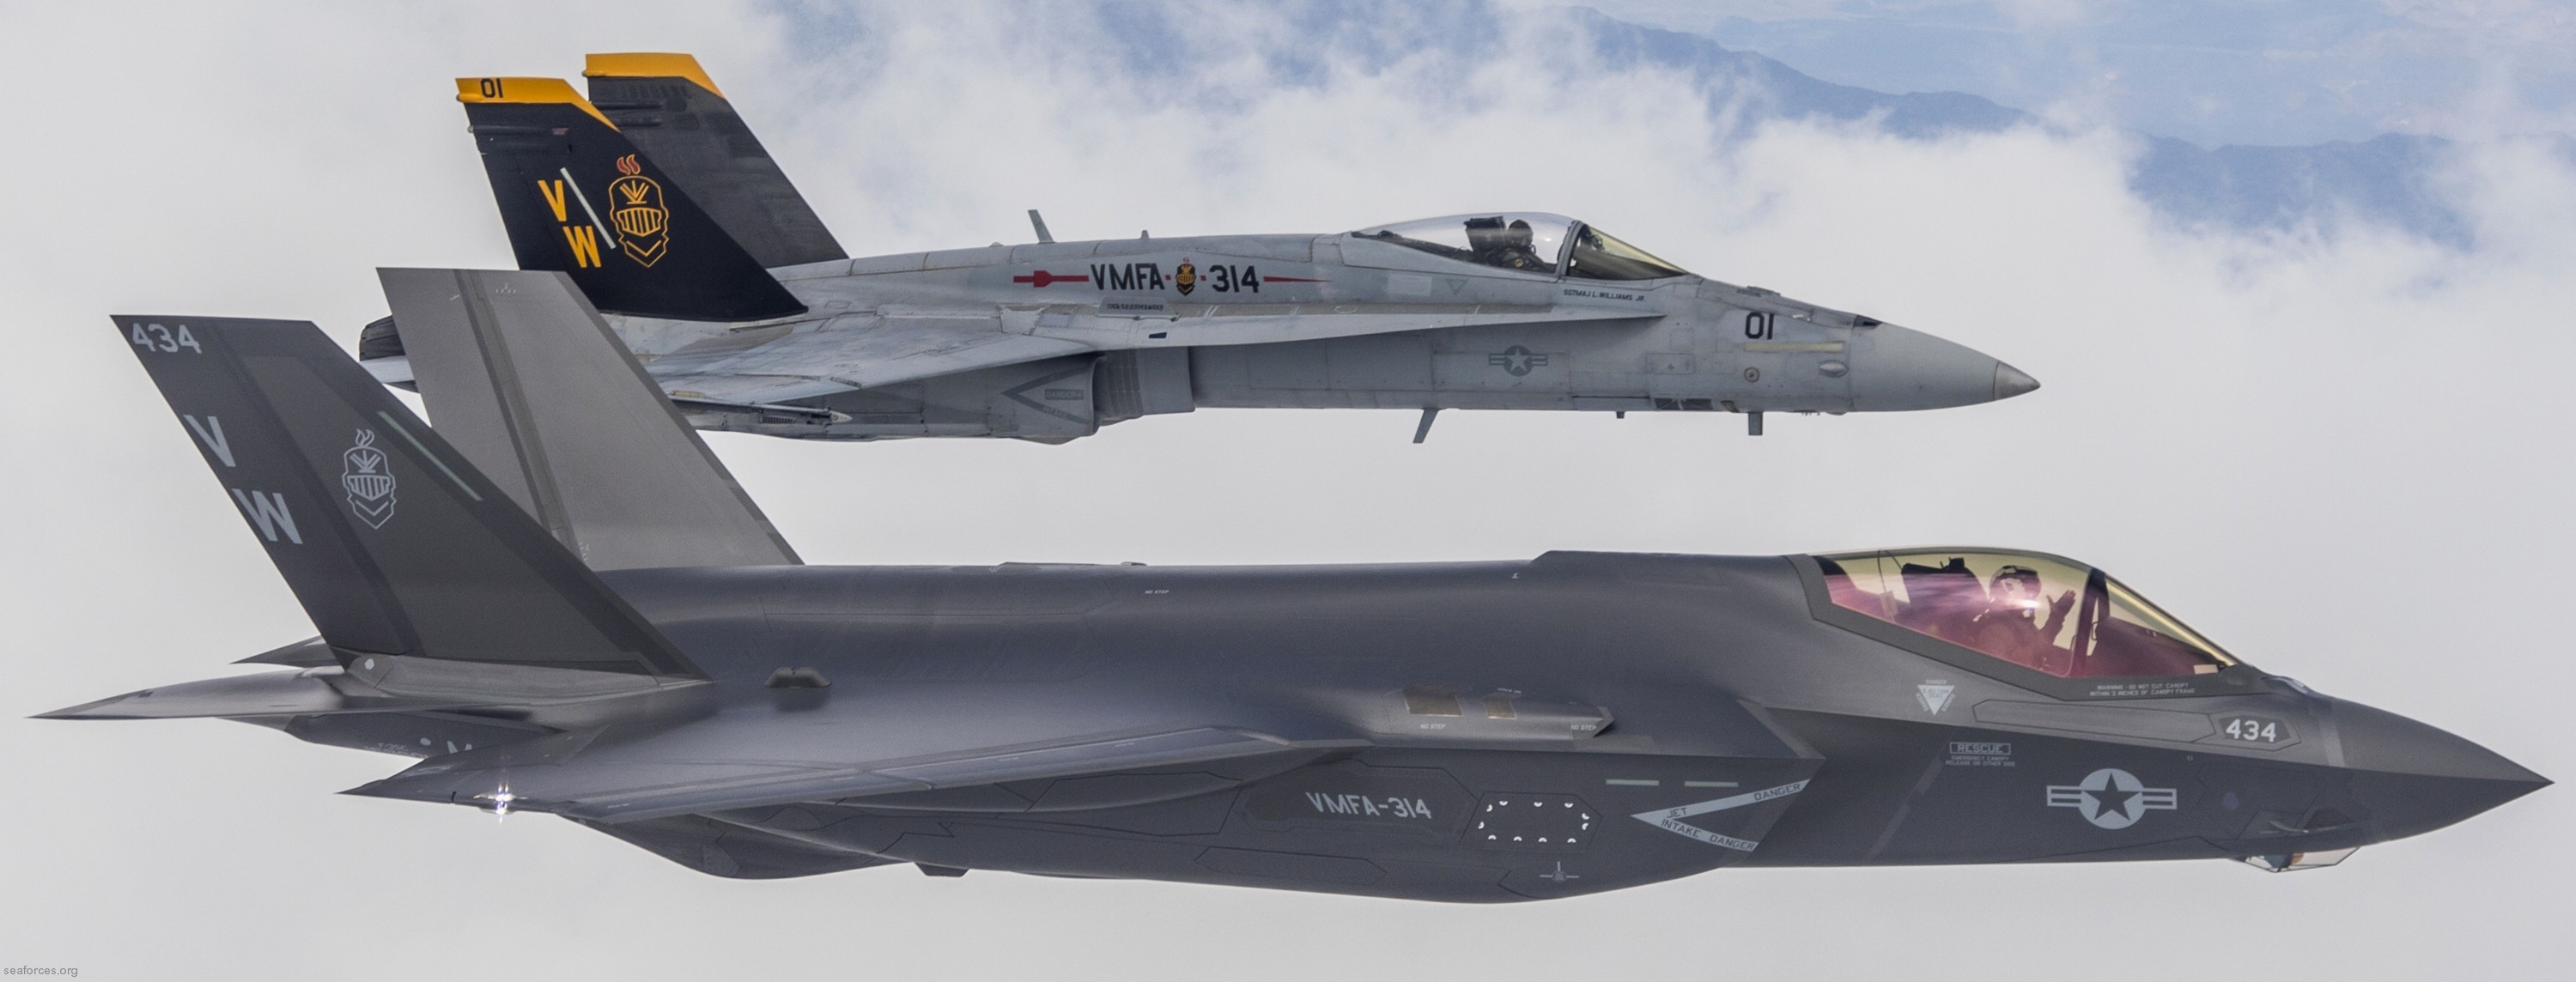 vmfa-314 black knights marine fighter attack squadron f-35c lightning ii usmc 06